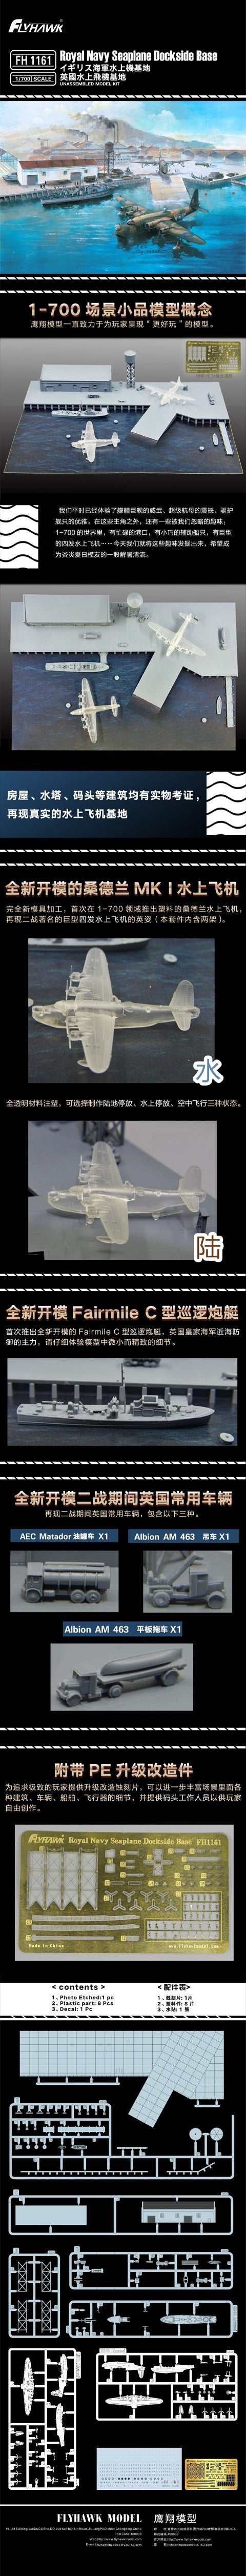 Flyhawk FH1161 1/700 ROYAL NAVY SEAPLANE DOCKSIDE BASE Plastic Model Kit